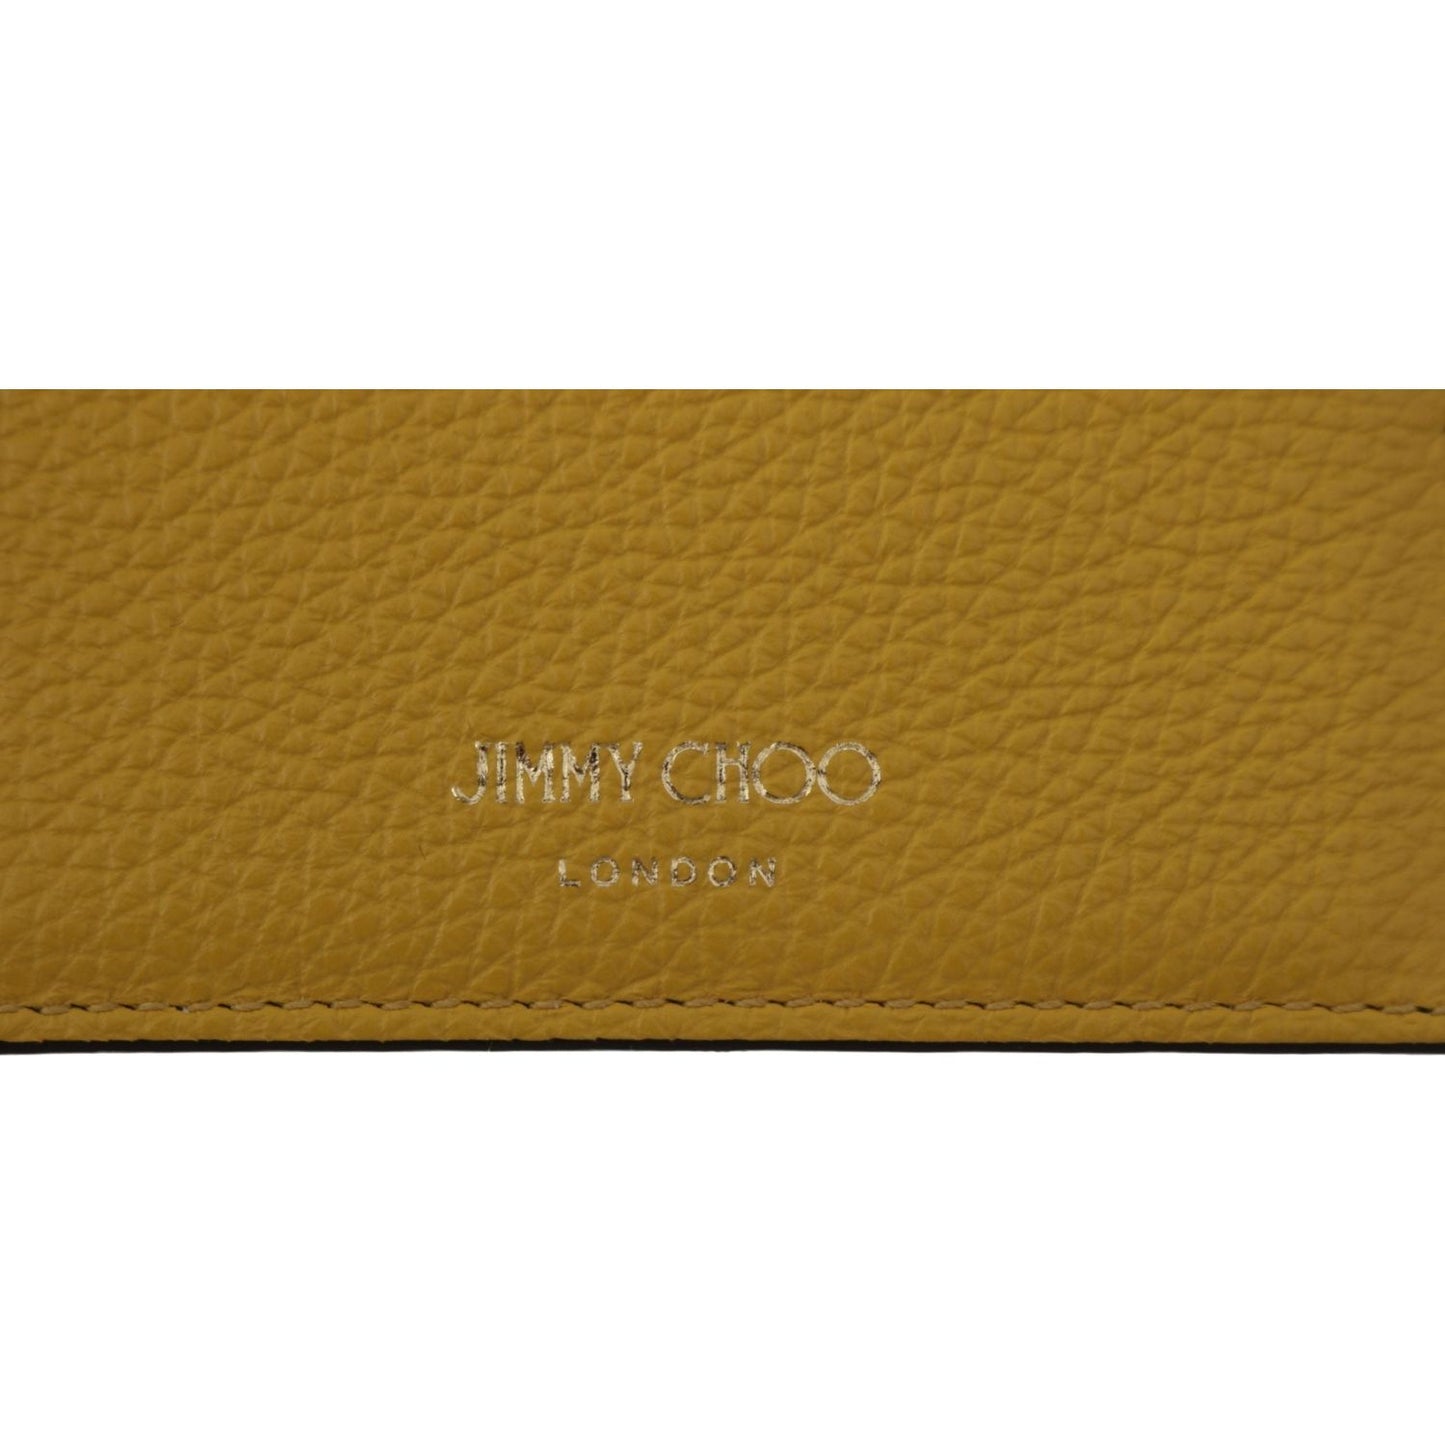 Jimmy Choo Sunshine Yellow Leather Card Holder aarna-yellow-leather-card-holder IMG_9762-scaled-e1c8919e-100.jpg